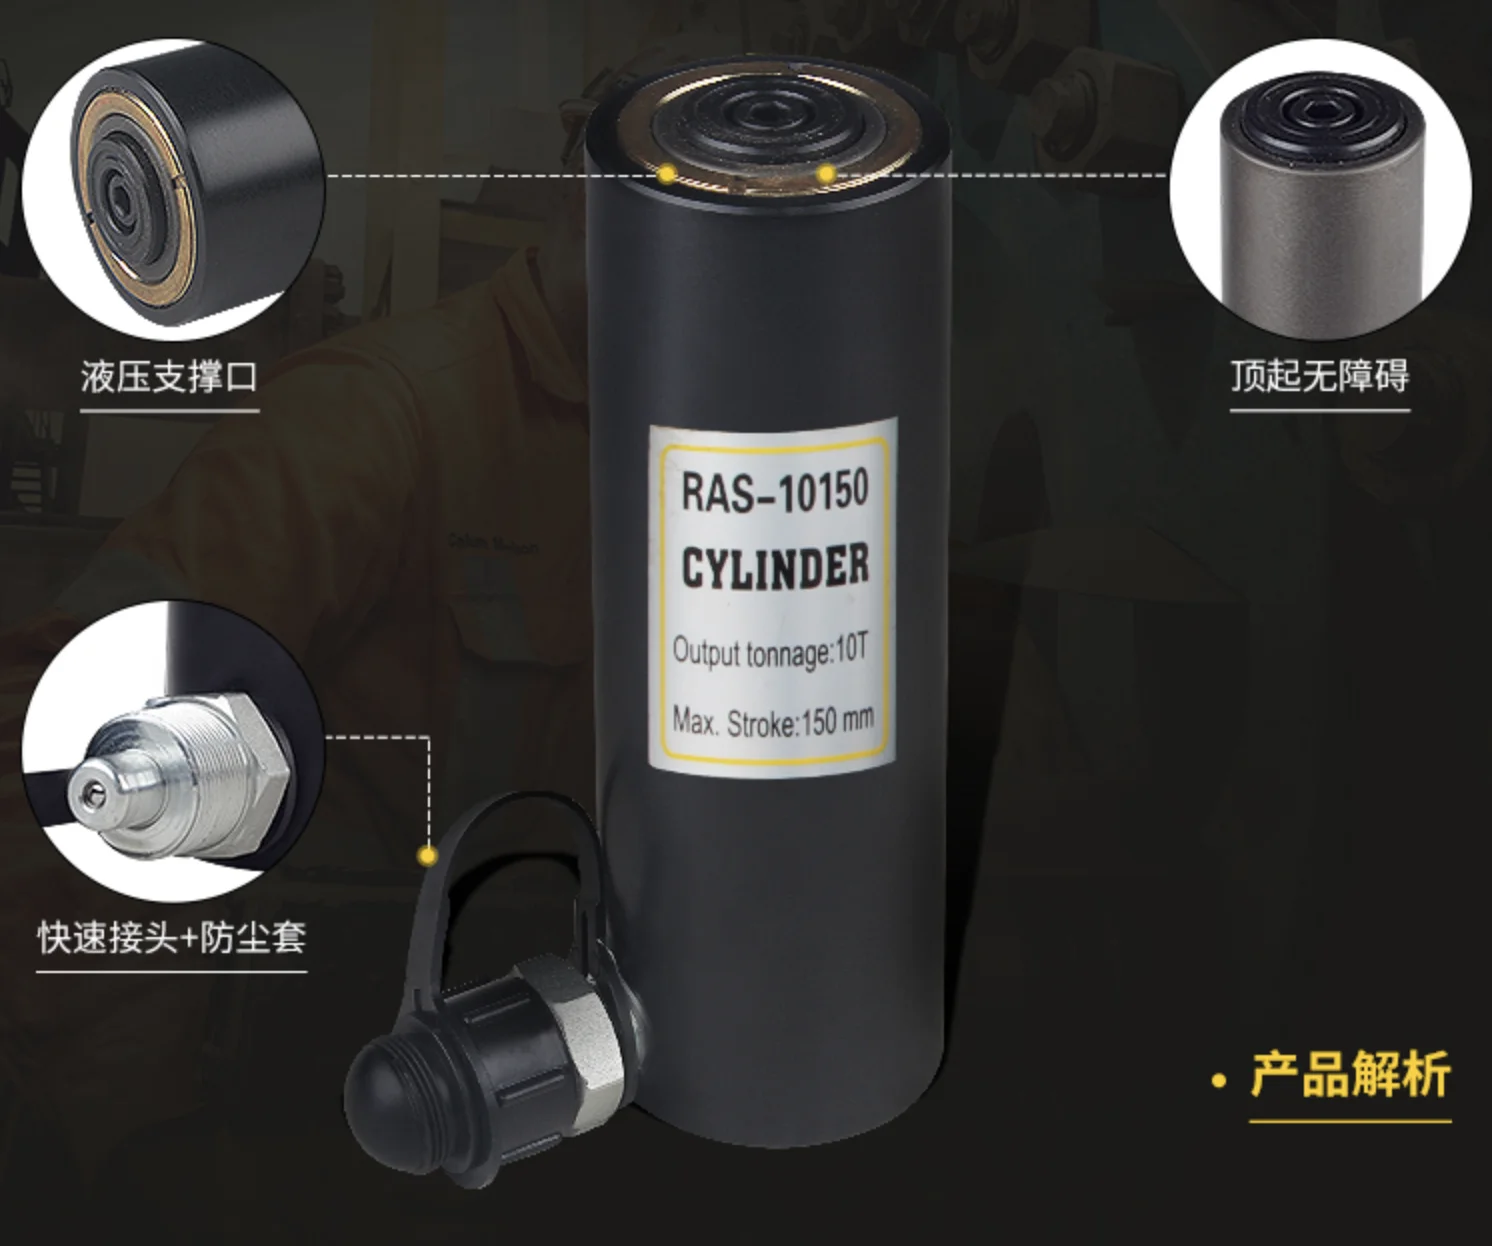 50ton 50 mm hoda prenosni hidravlični priključek RAS aluminija, hidravlična olja jack RAS-5050 horizontalna in vertikalna hidravlični cilinder